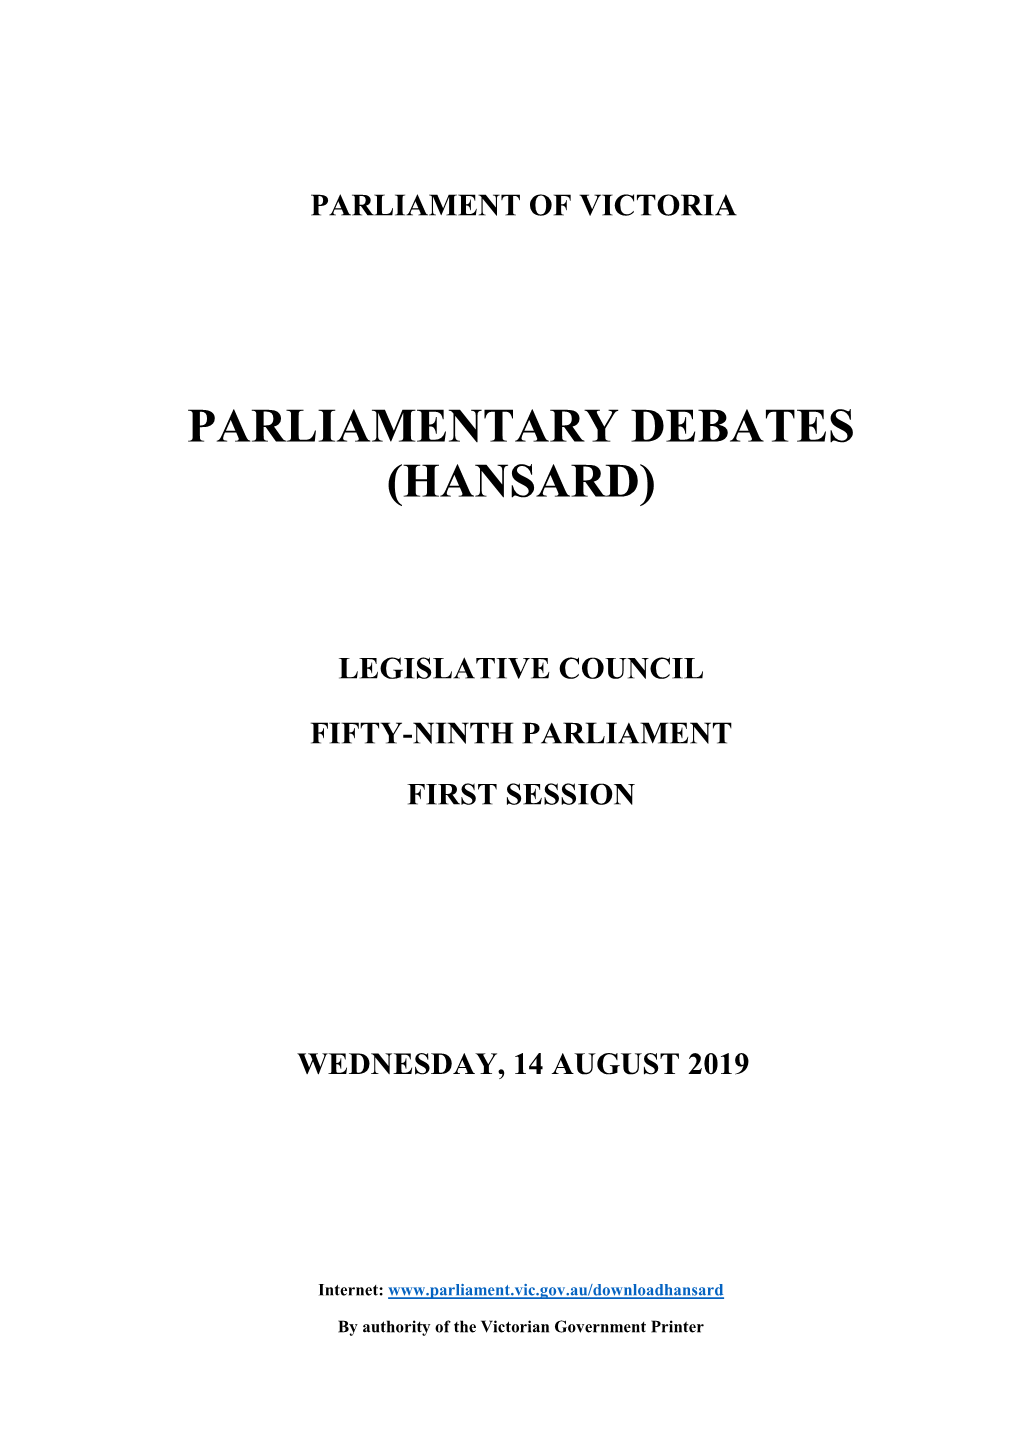 (Hansard) Legislative Council Fifty-Ninth Parliament First Session Wednesday, 14 August 2019